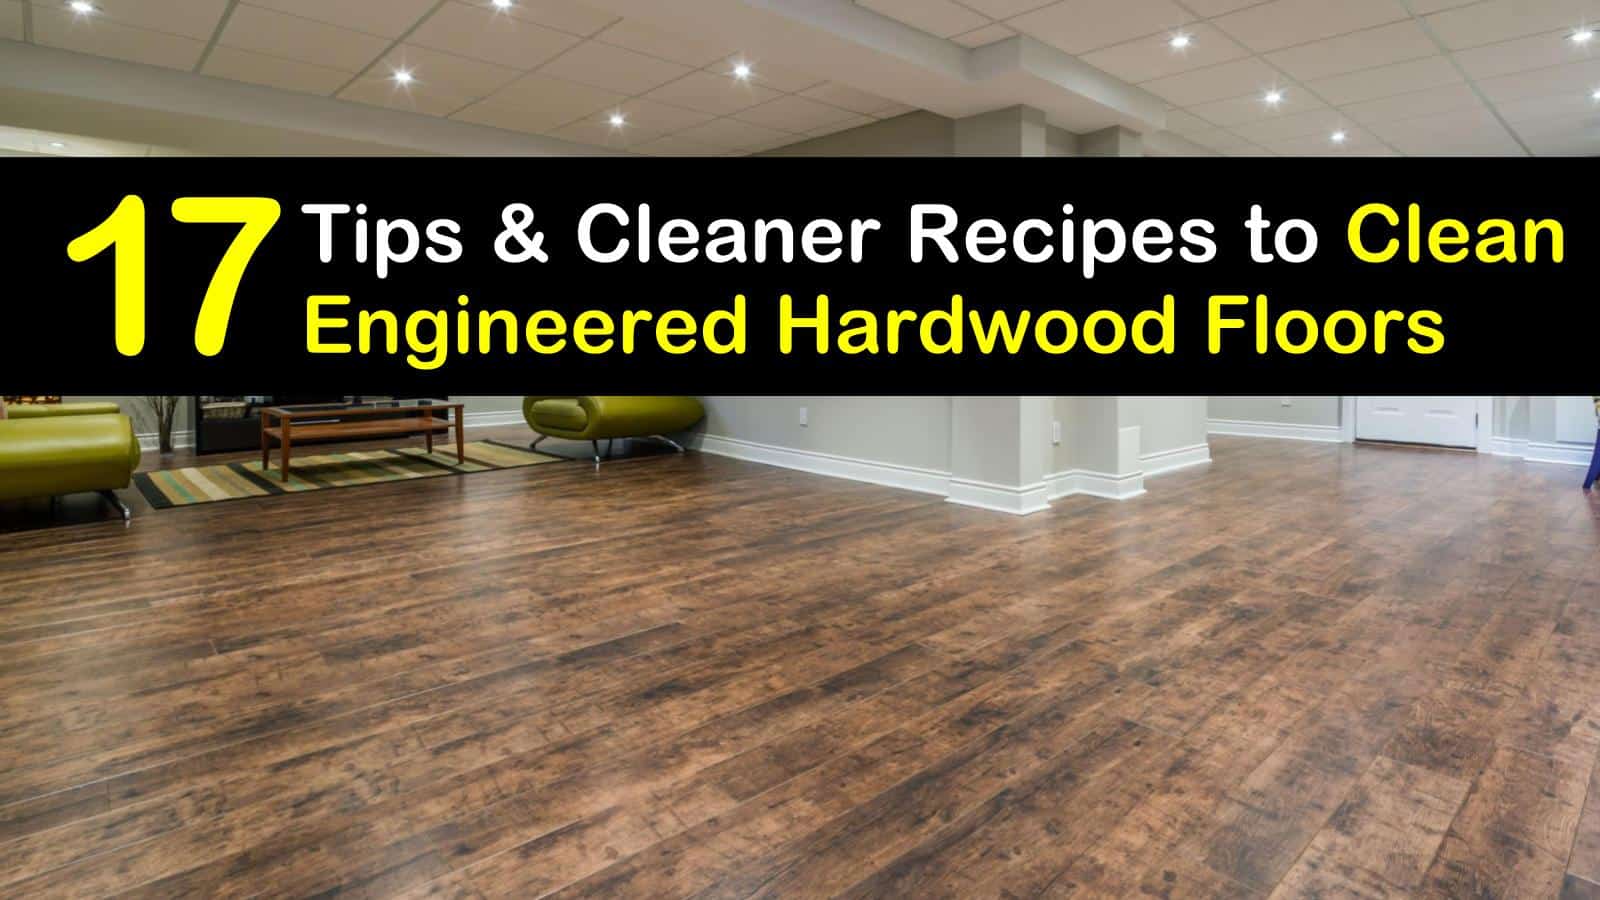 Clean Engineered Hardwood Floors, Engineered Hardwood Floors Scratch Easily